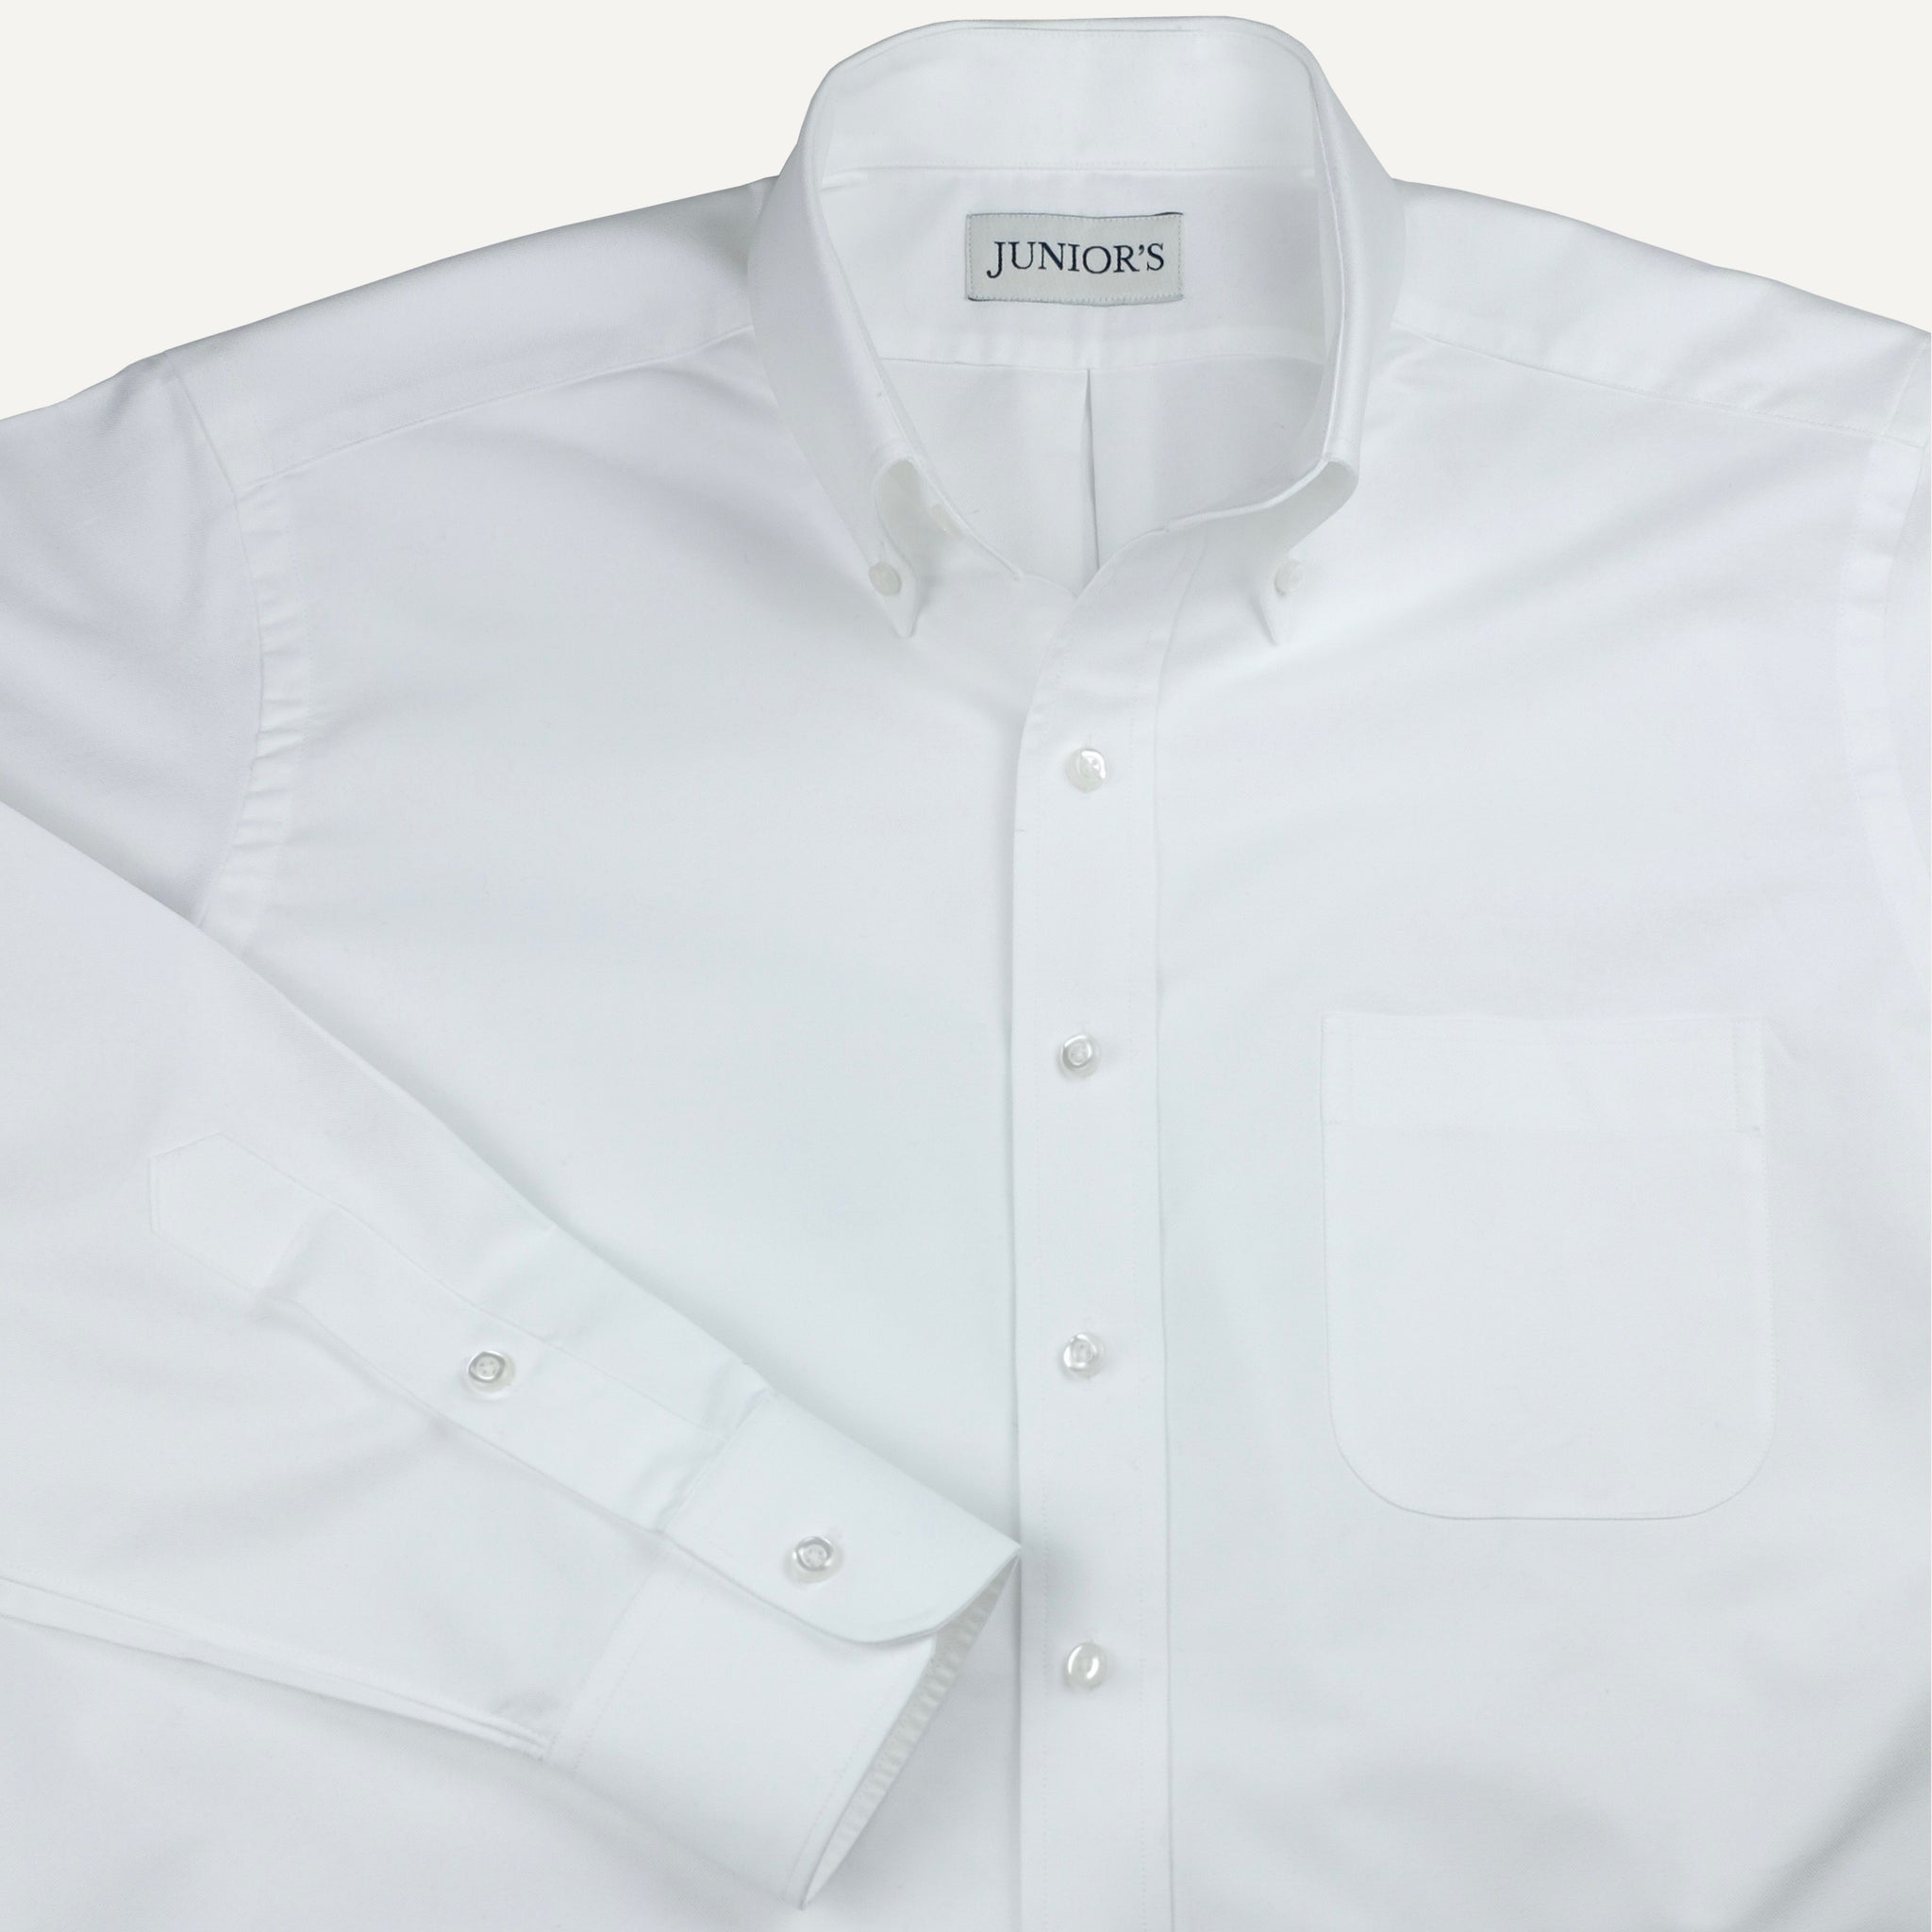 Oxford Cloth Button Down Shirt Guide - OCBD